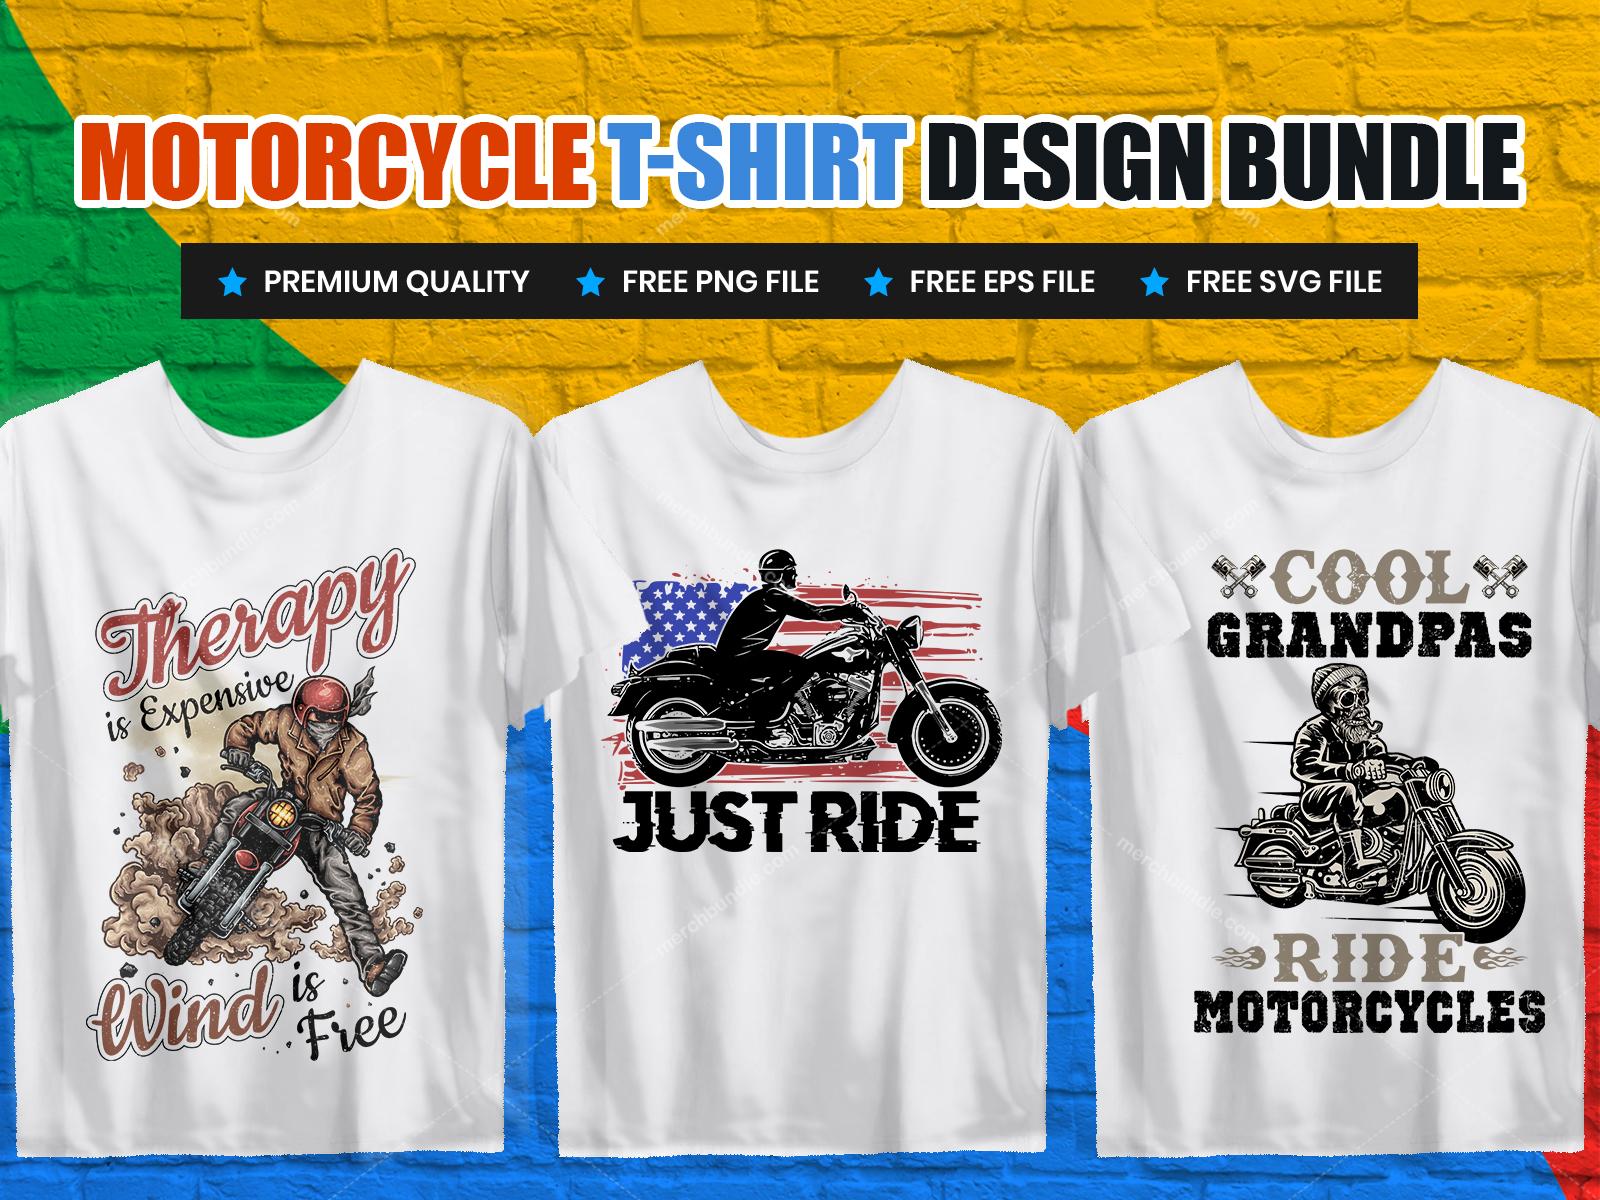 Motorcycle T-Shirts - Motorcycle T-ShirtsMotorcycle T-Shirts